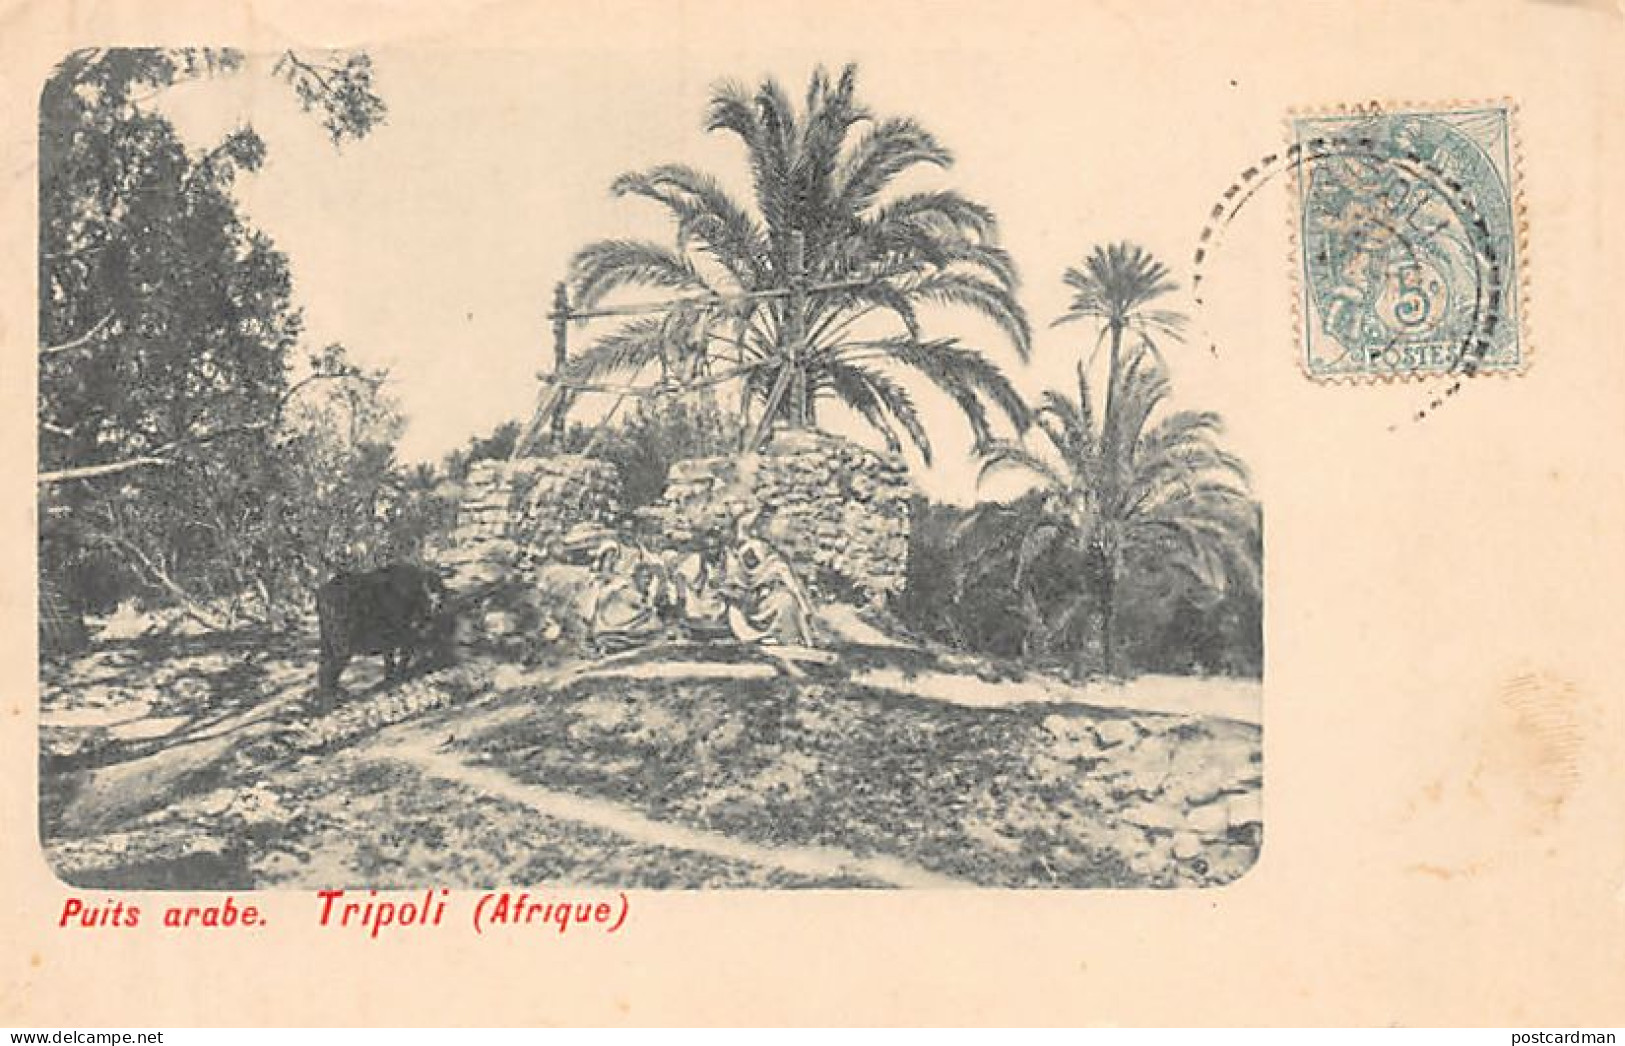 Libya - TRIPOLI - An Arab Well - Libia